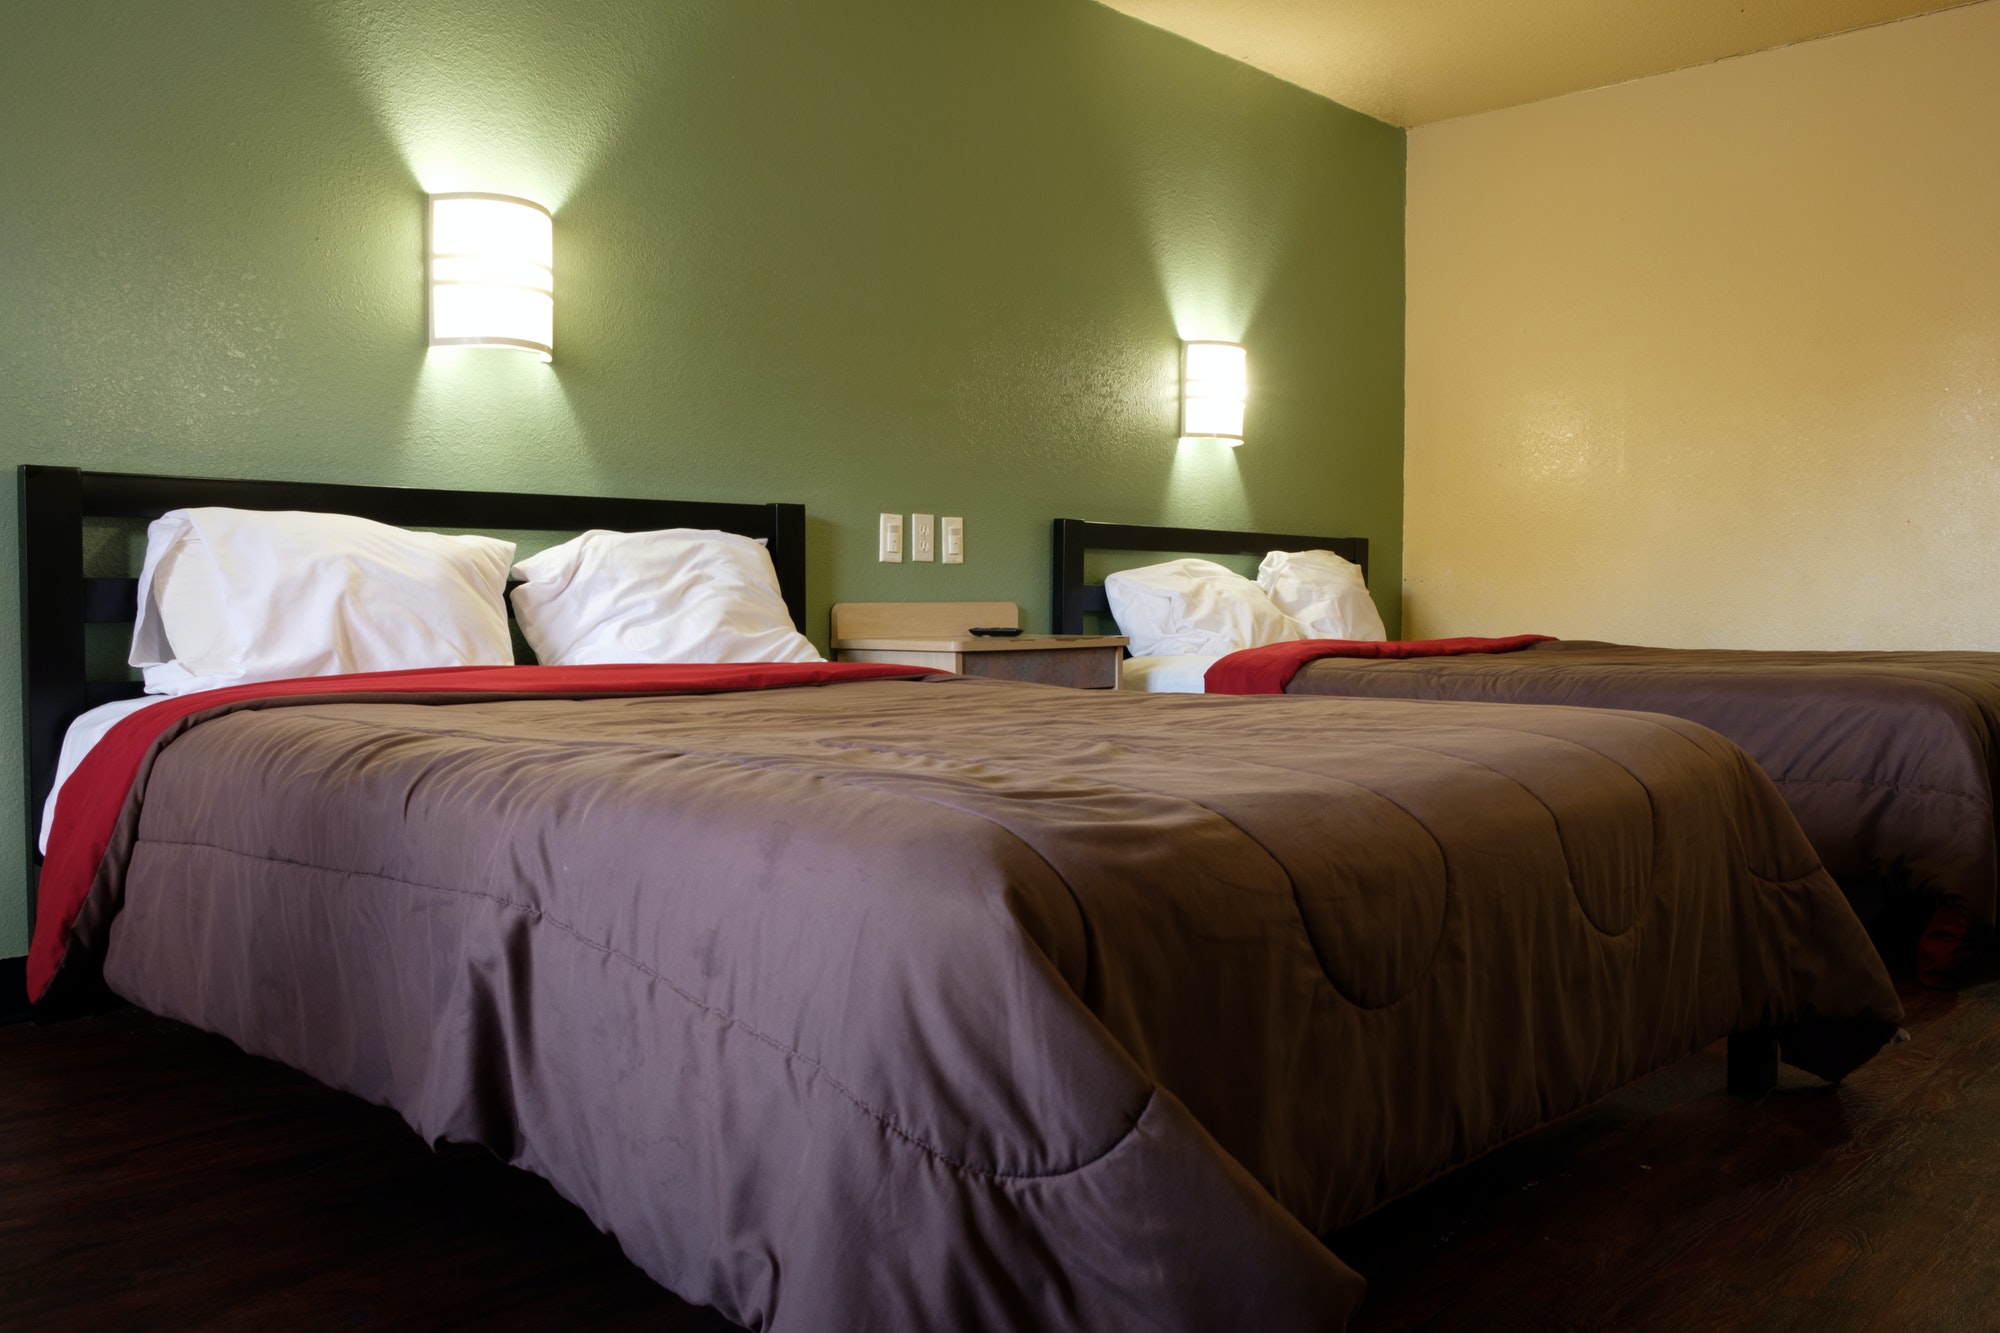 standard-double-beds-hotel-room.jpg